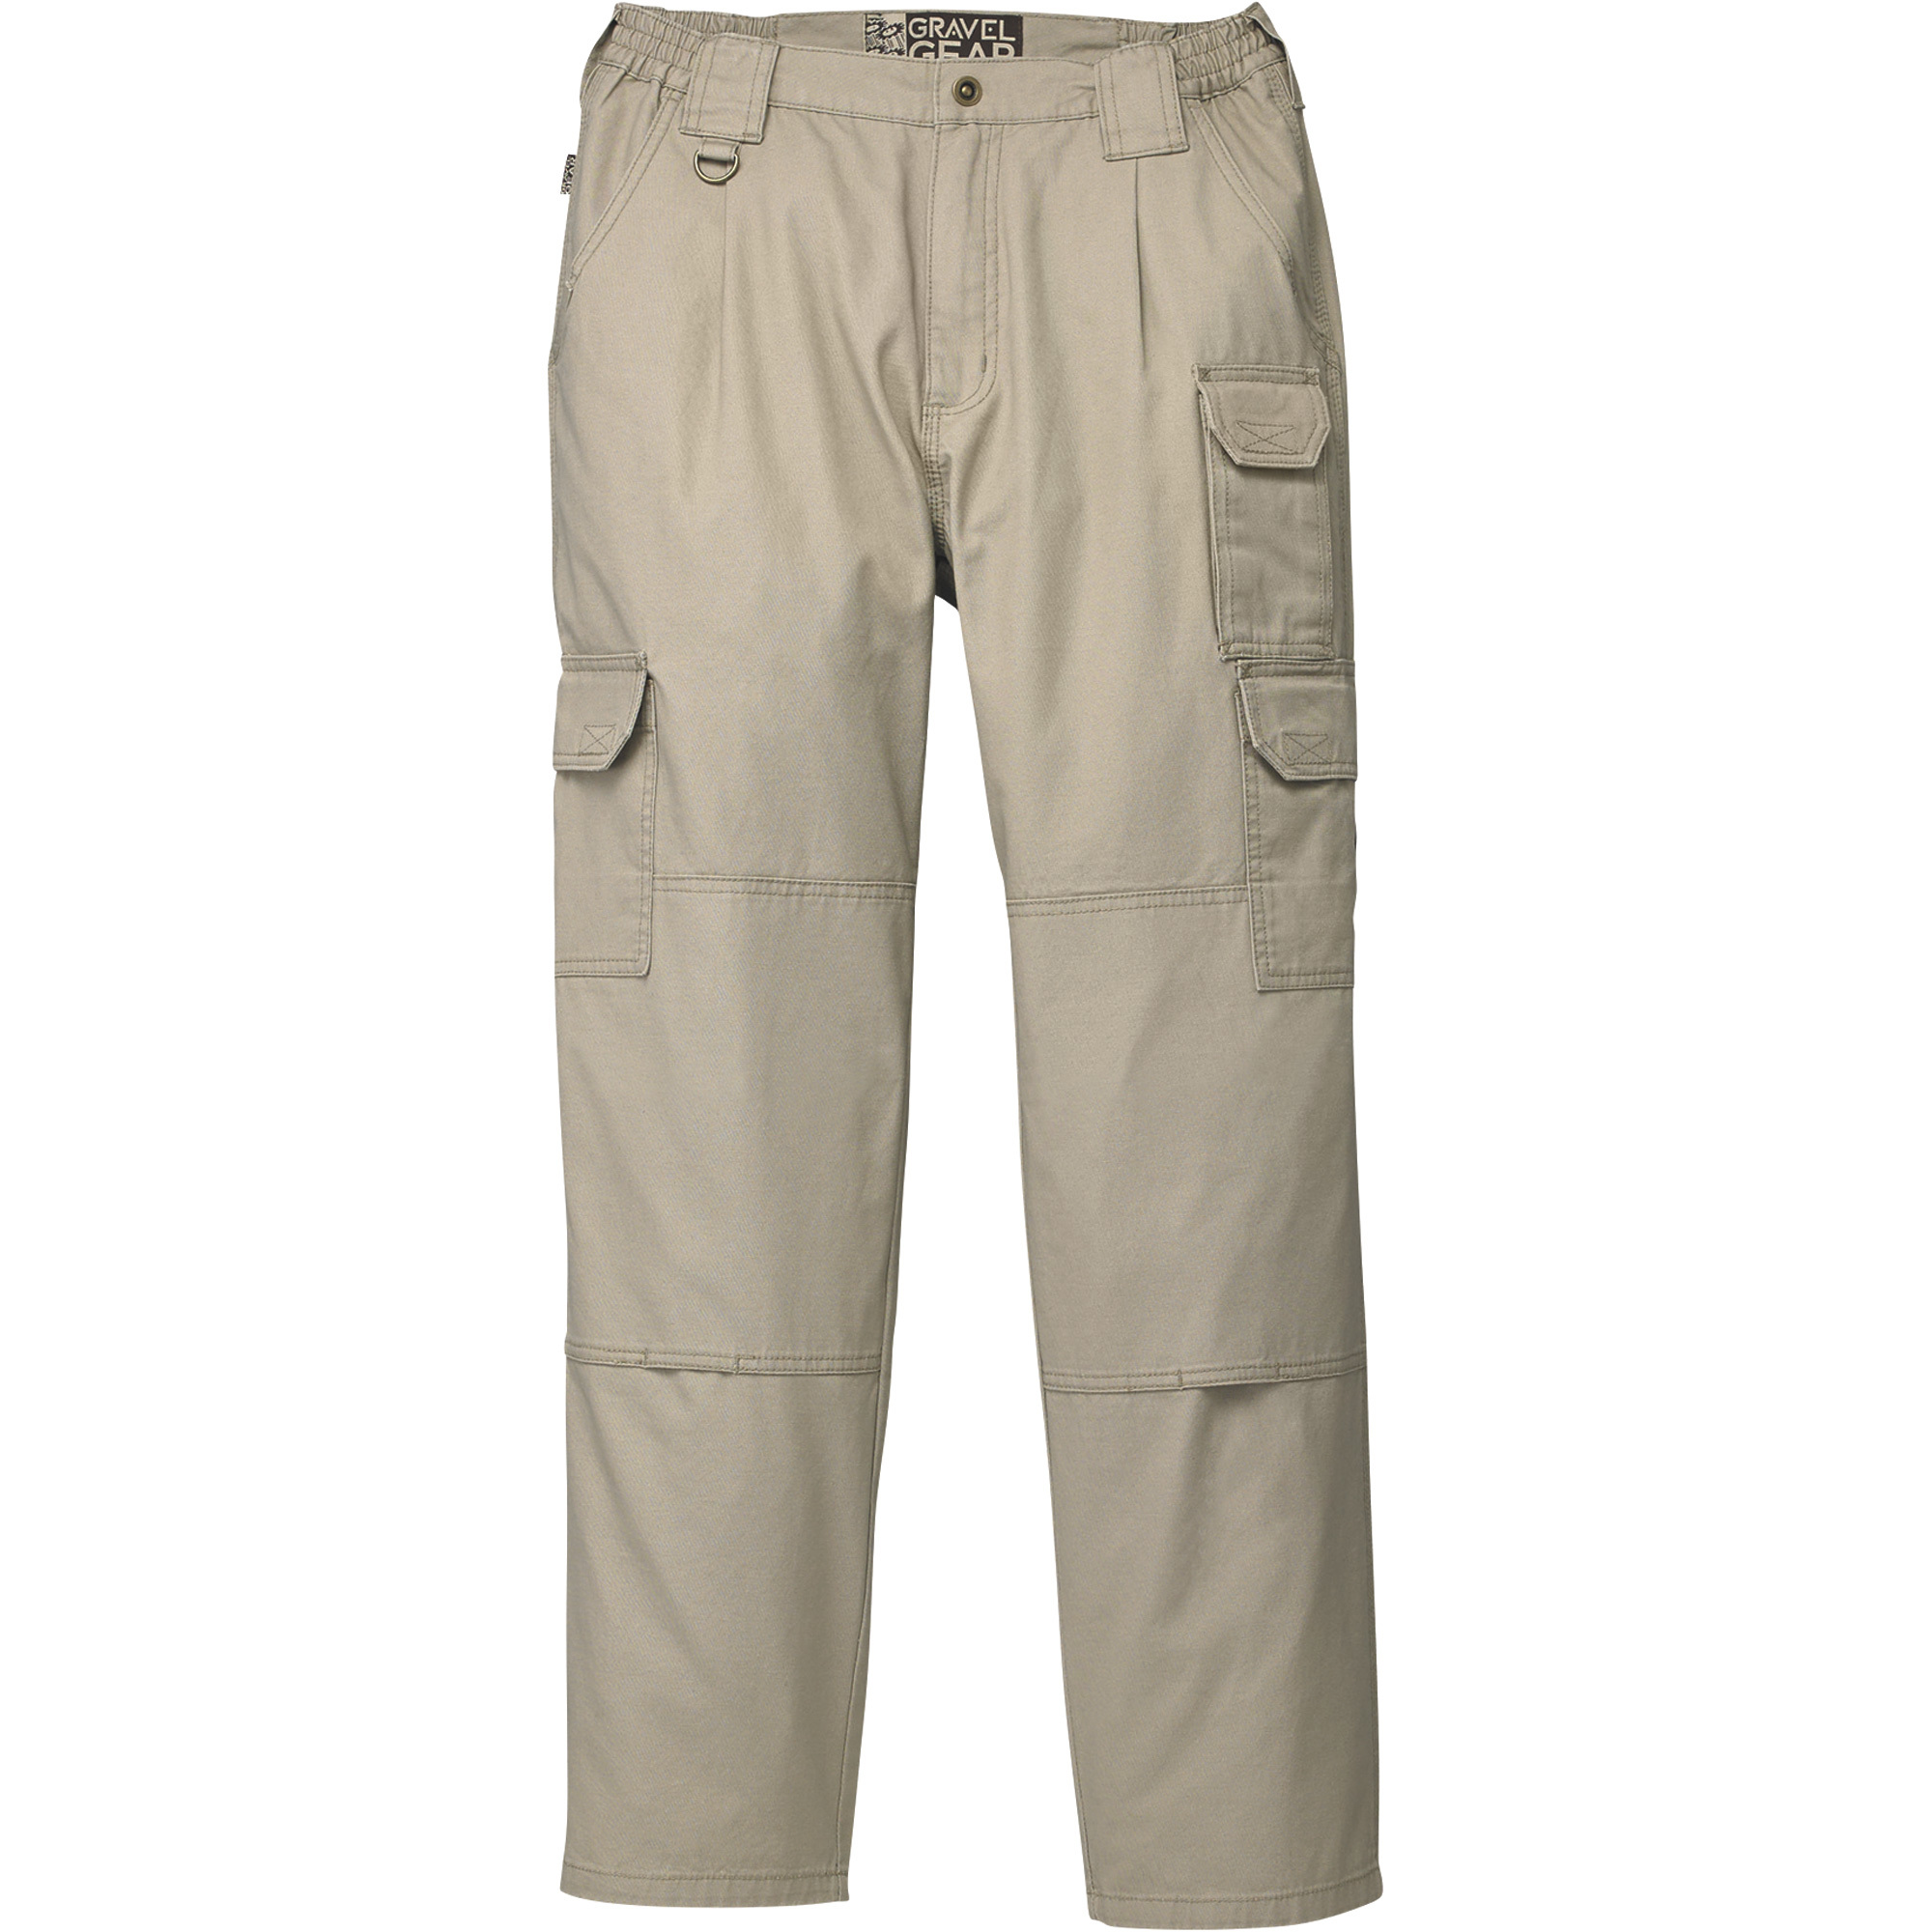 Gravel Gear Men's 7-Pocket Tactical Pants with Teflon - Khaki, 32Inch Waist x 34Inch Inseam